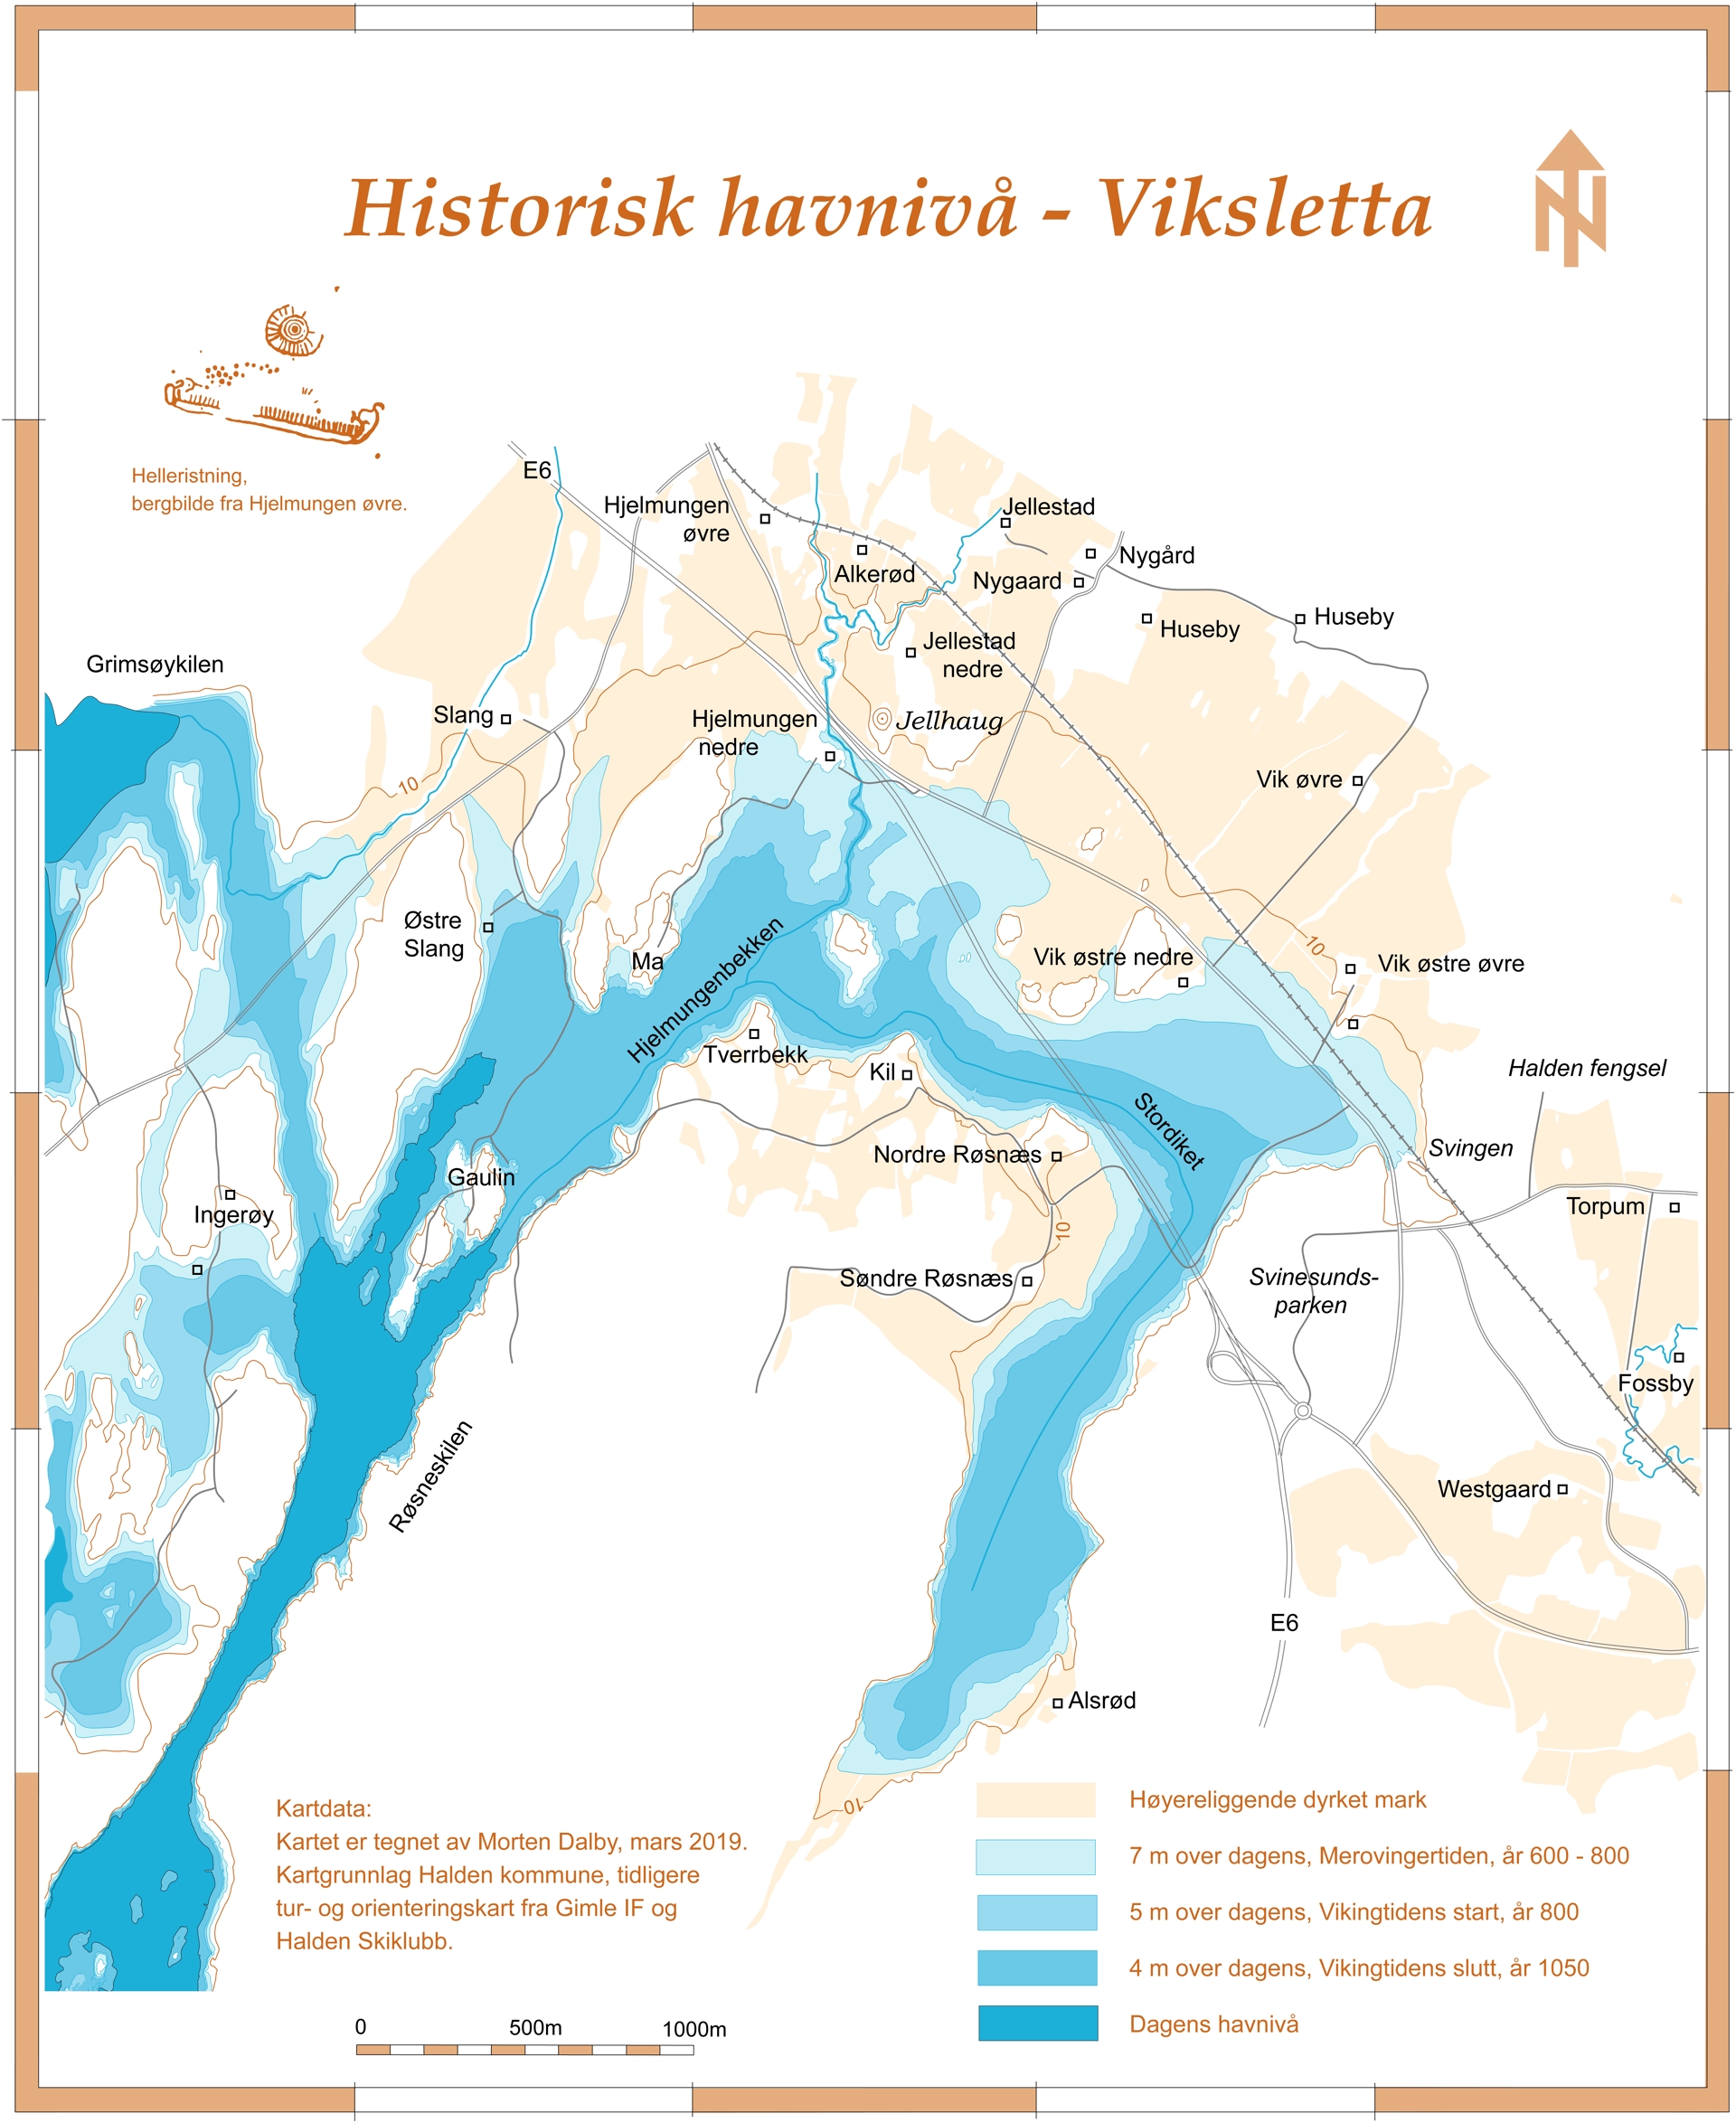 Historisk havnivå - Vikseletta 230319.jpg